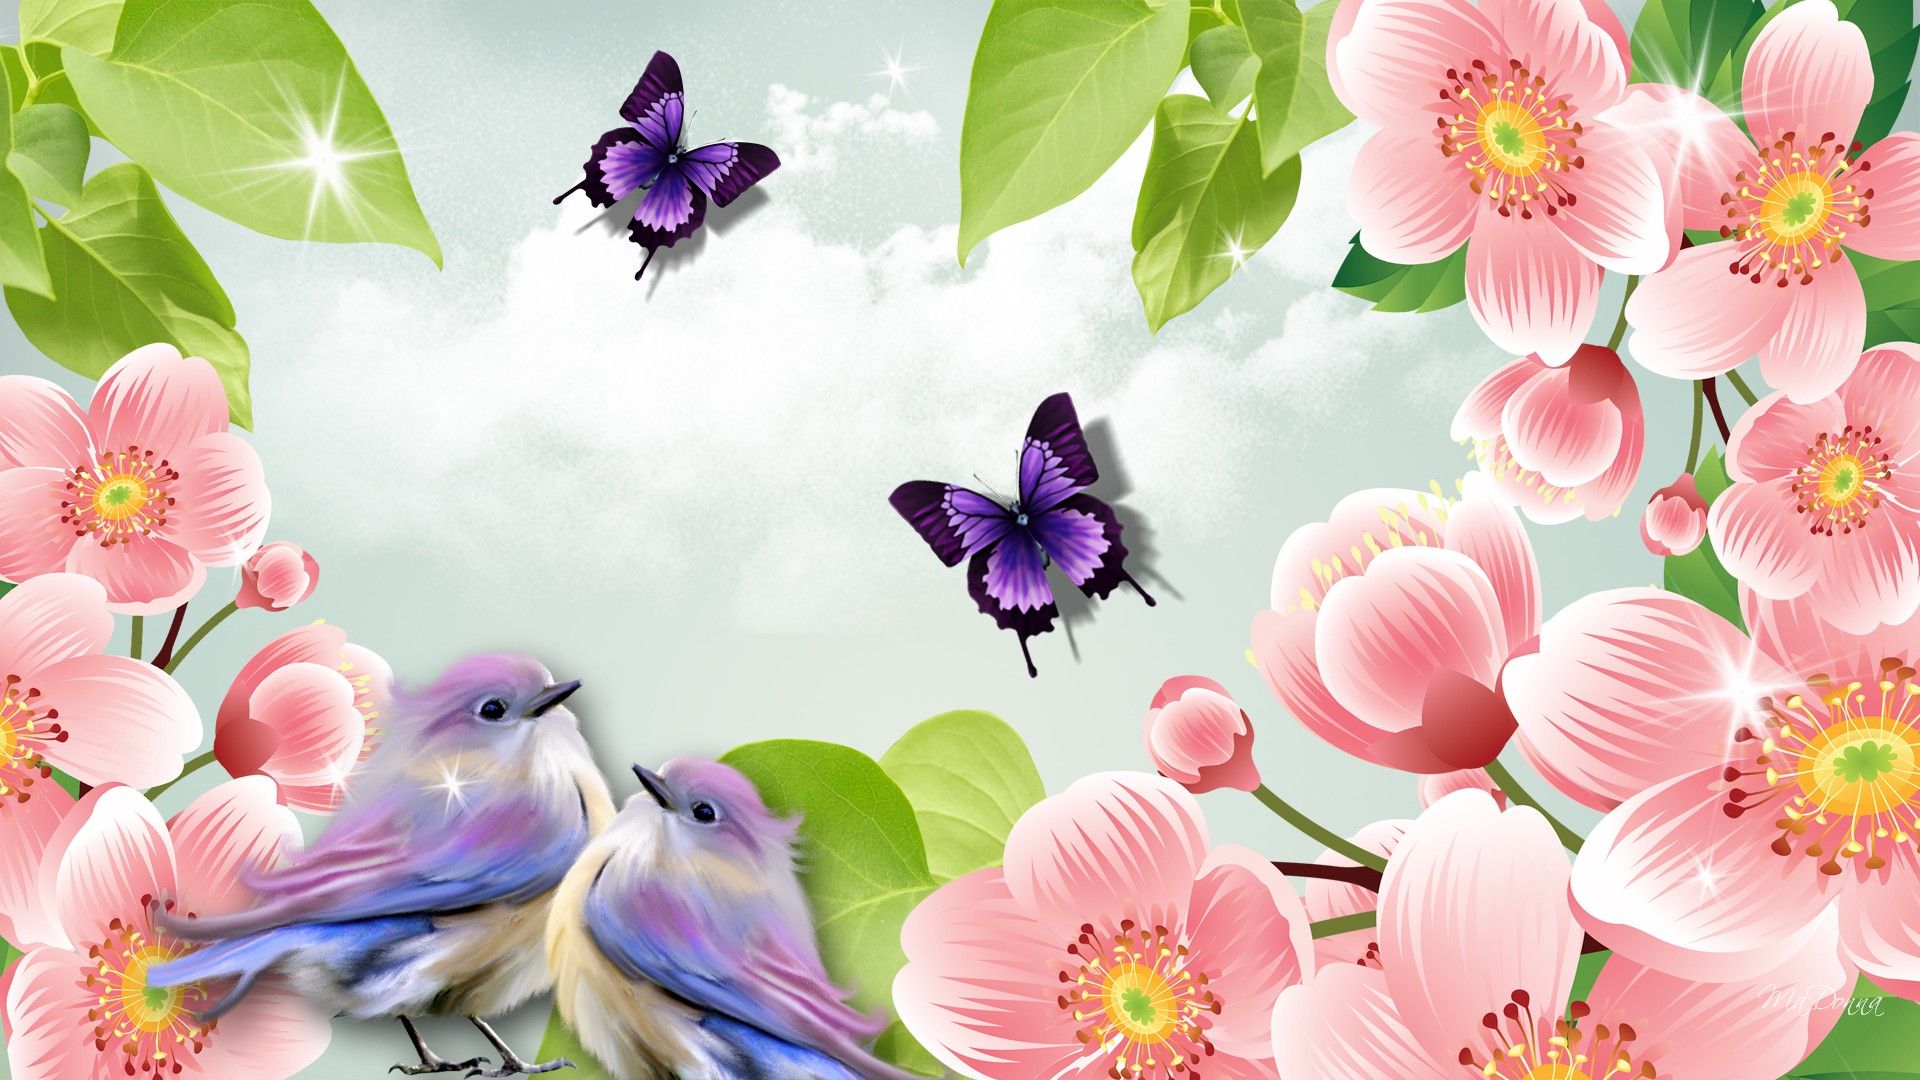 Images For Cute Spring Desktop Wallpaper The Background